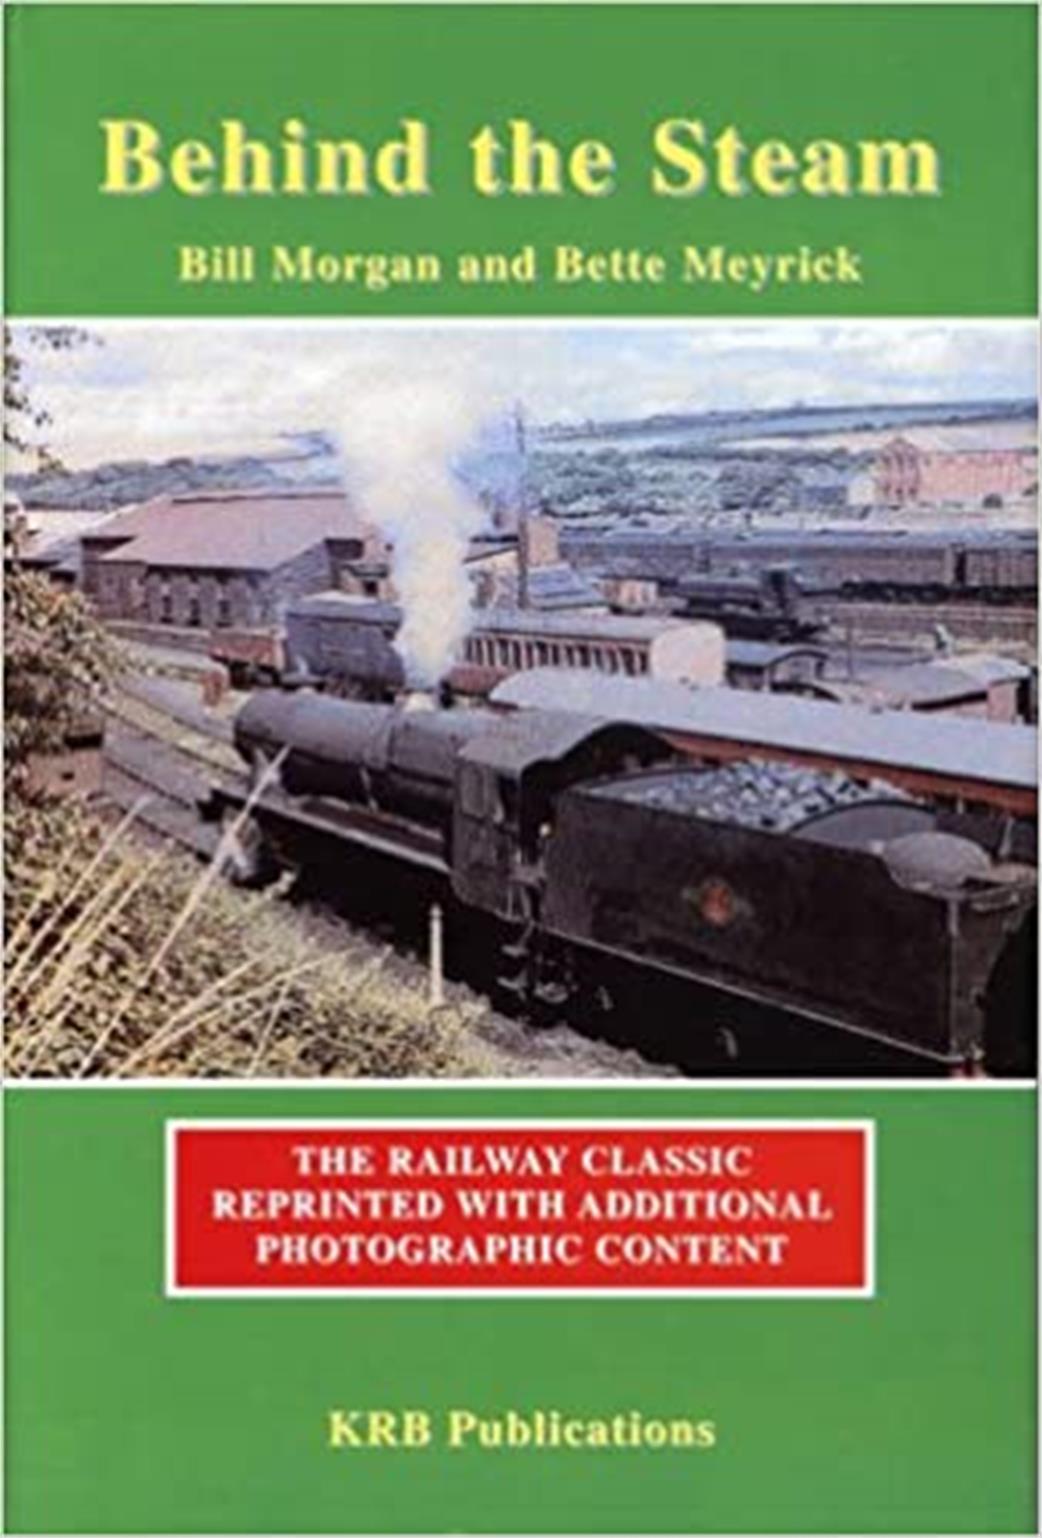 9780954485900 Behind The Steam Book by Bill Morgan & Bette Meyrick